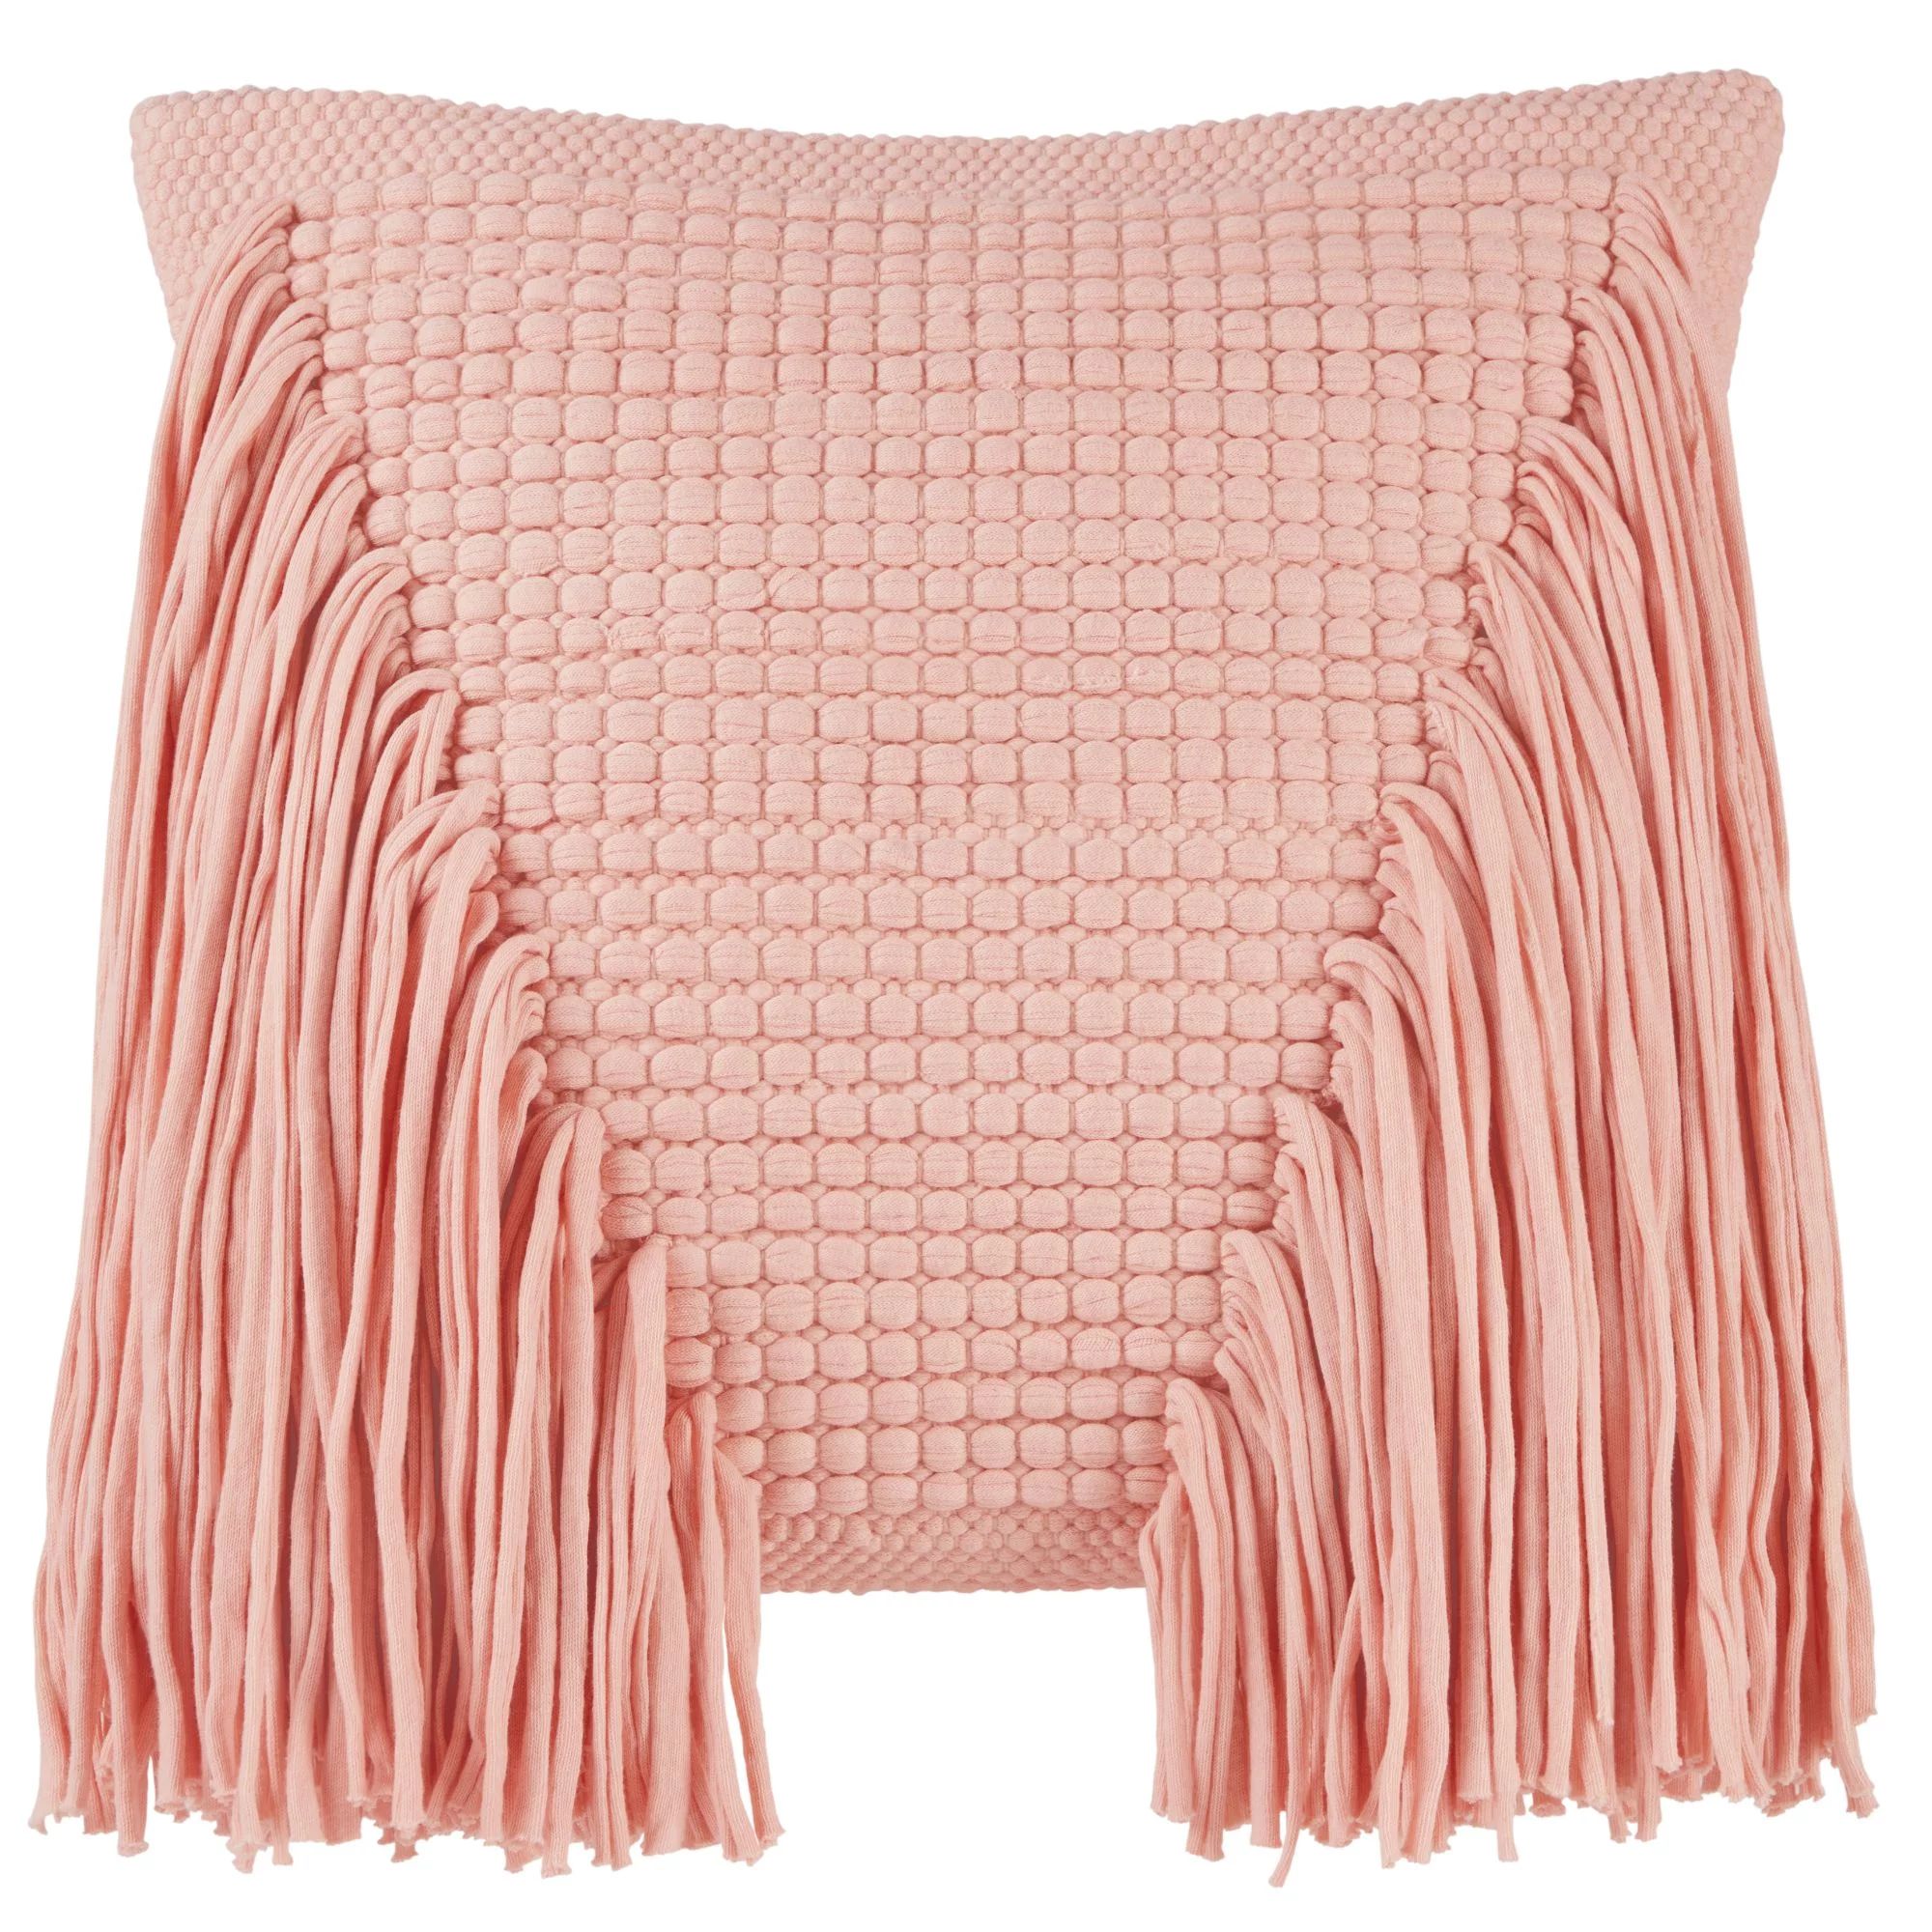 Wanda June Home Jersey Knit Fringe Pillow, 1 Piece, Pink, 18"x18" by Miranda Lambert - Walmart.co... | Walmart (US)